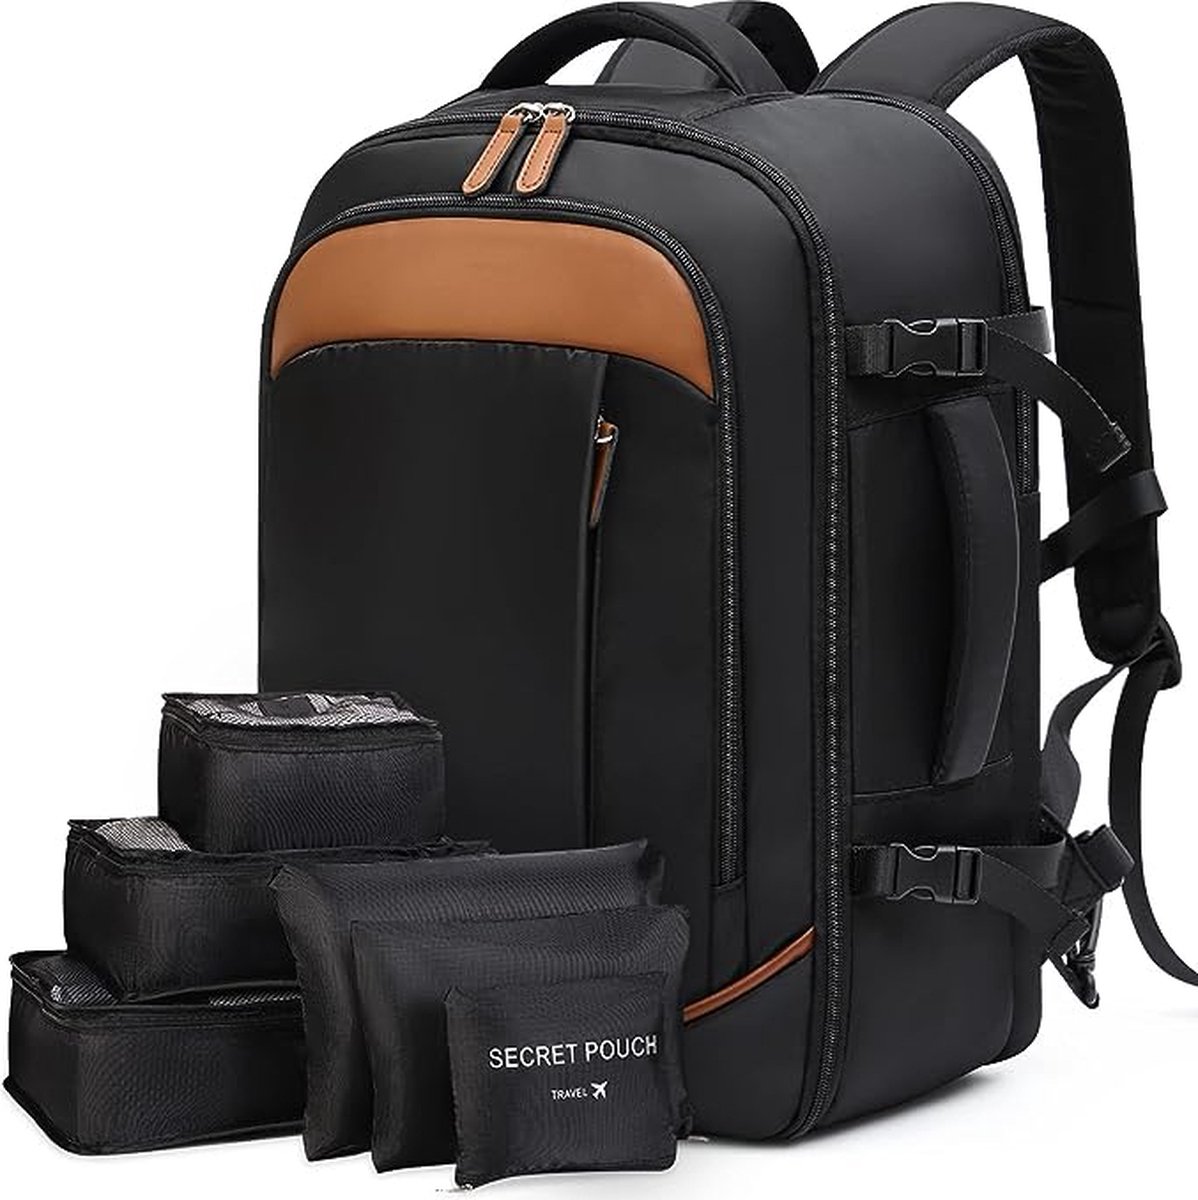 SHOP YOLO - Rugzak Dames reizen -Handbagage- 6-delige kledingzakken- waterdichte -17.3 inch laptop met USB - Zwart & Bruin